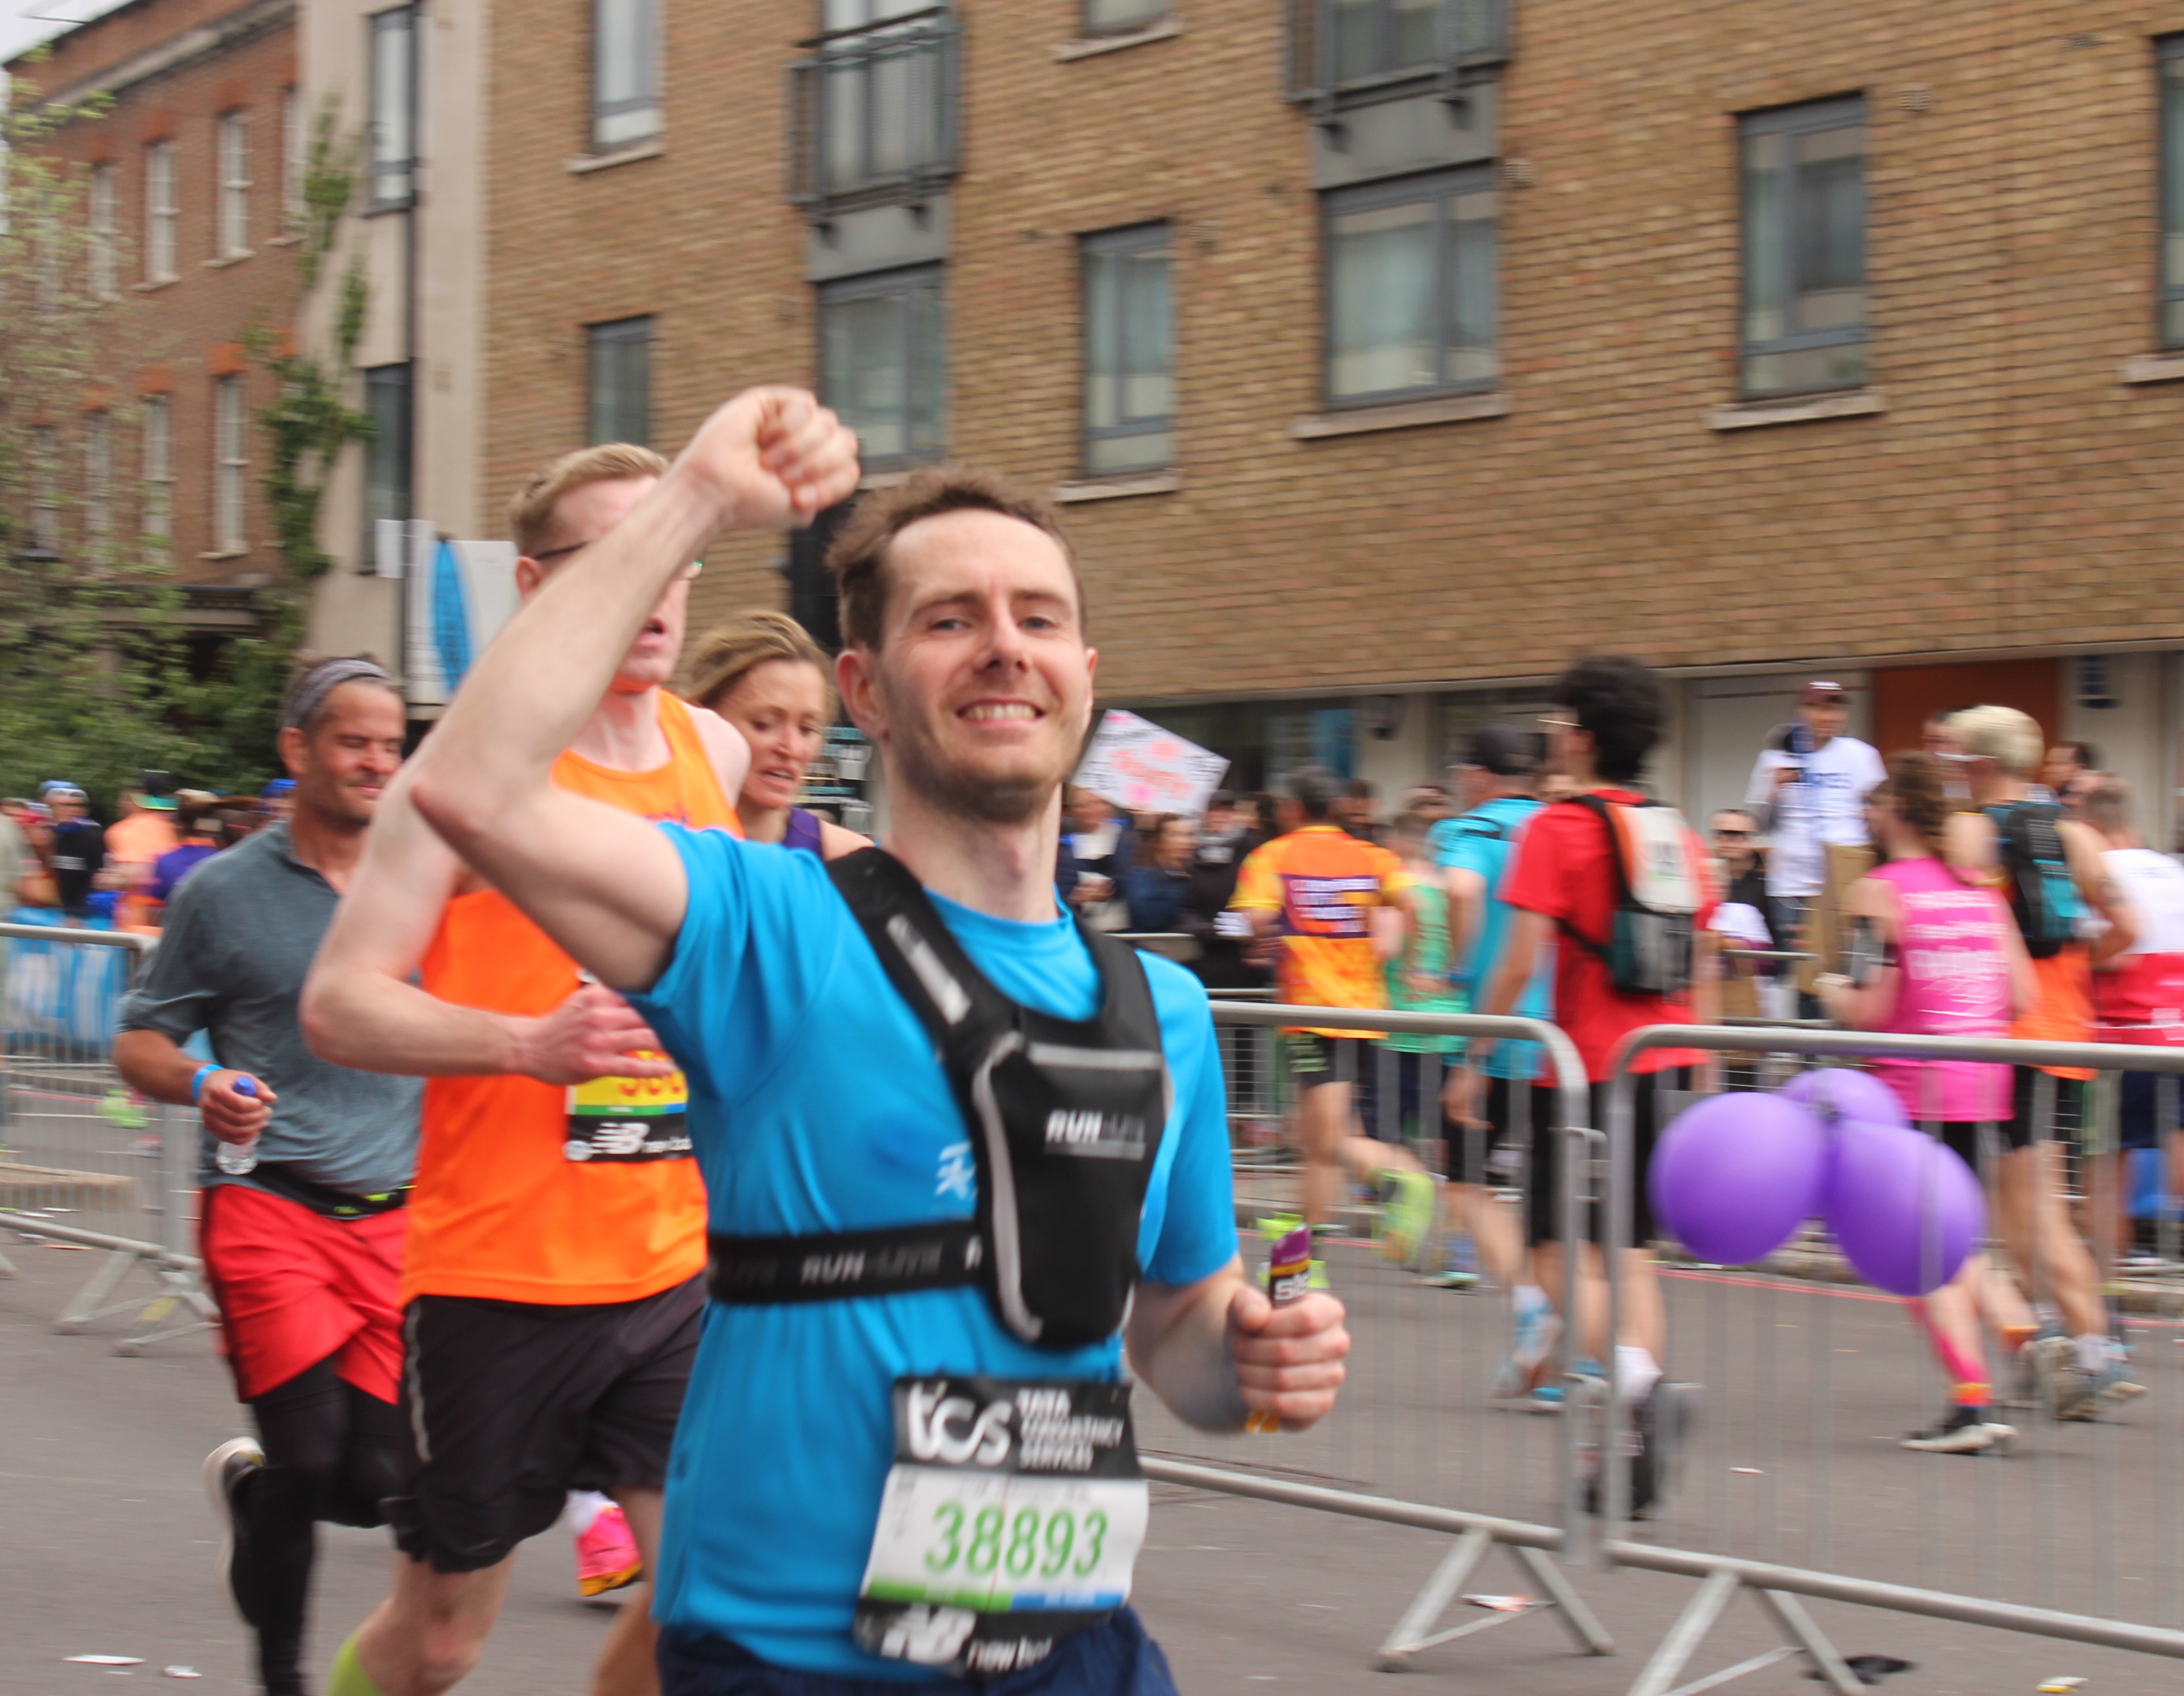 Runners raise thousands for Catholic charities in London marathon